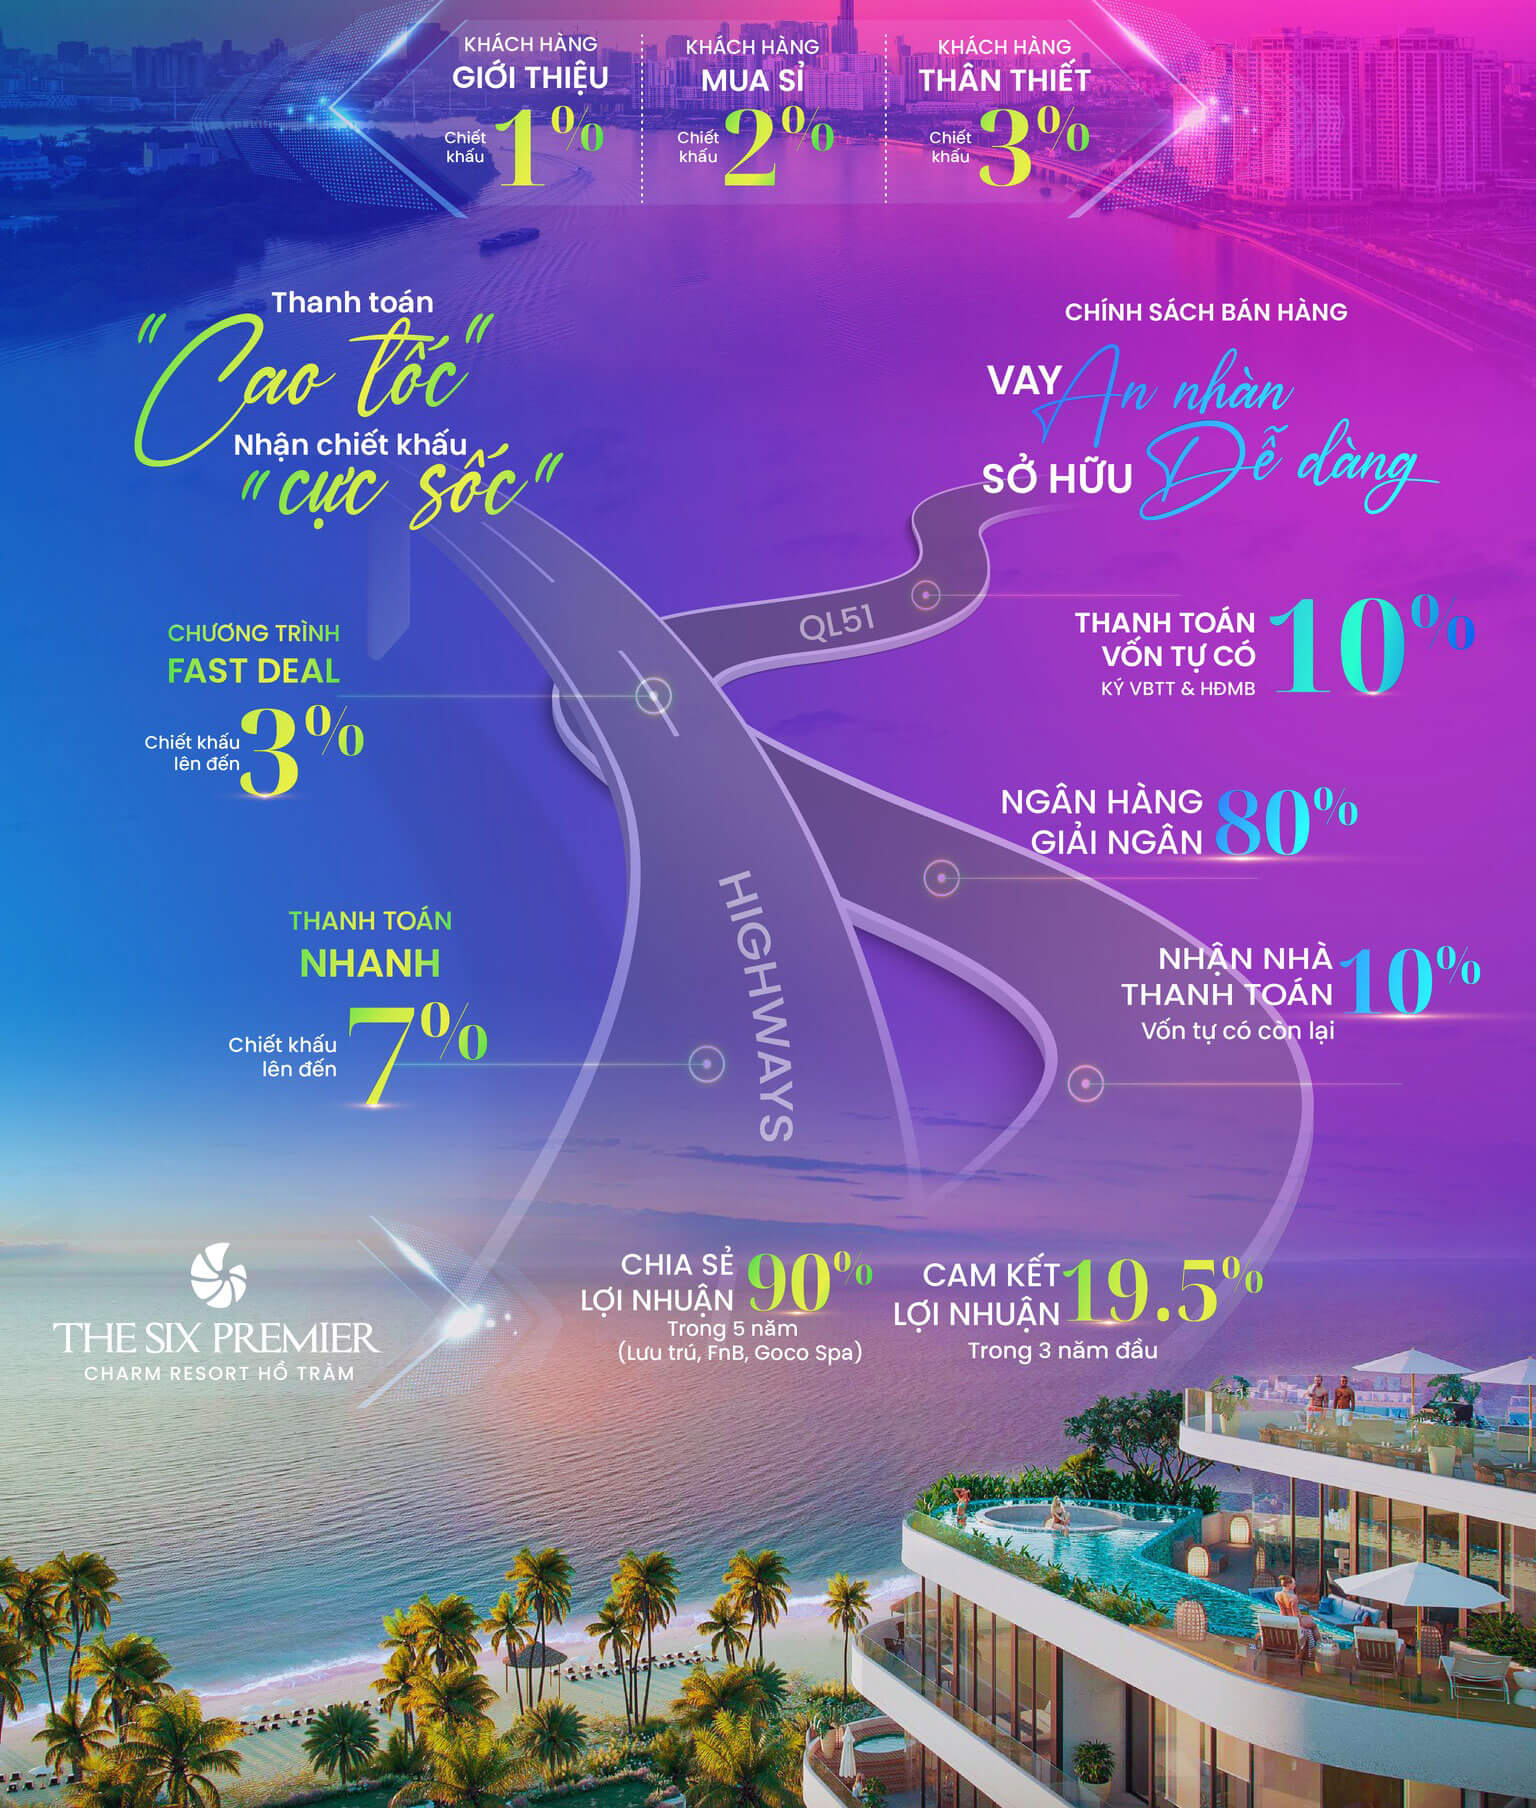 Charm Hồ Tràm Resort - The Six Premier